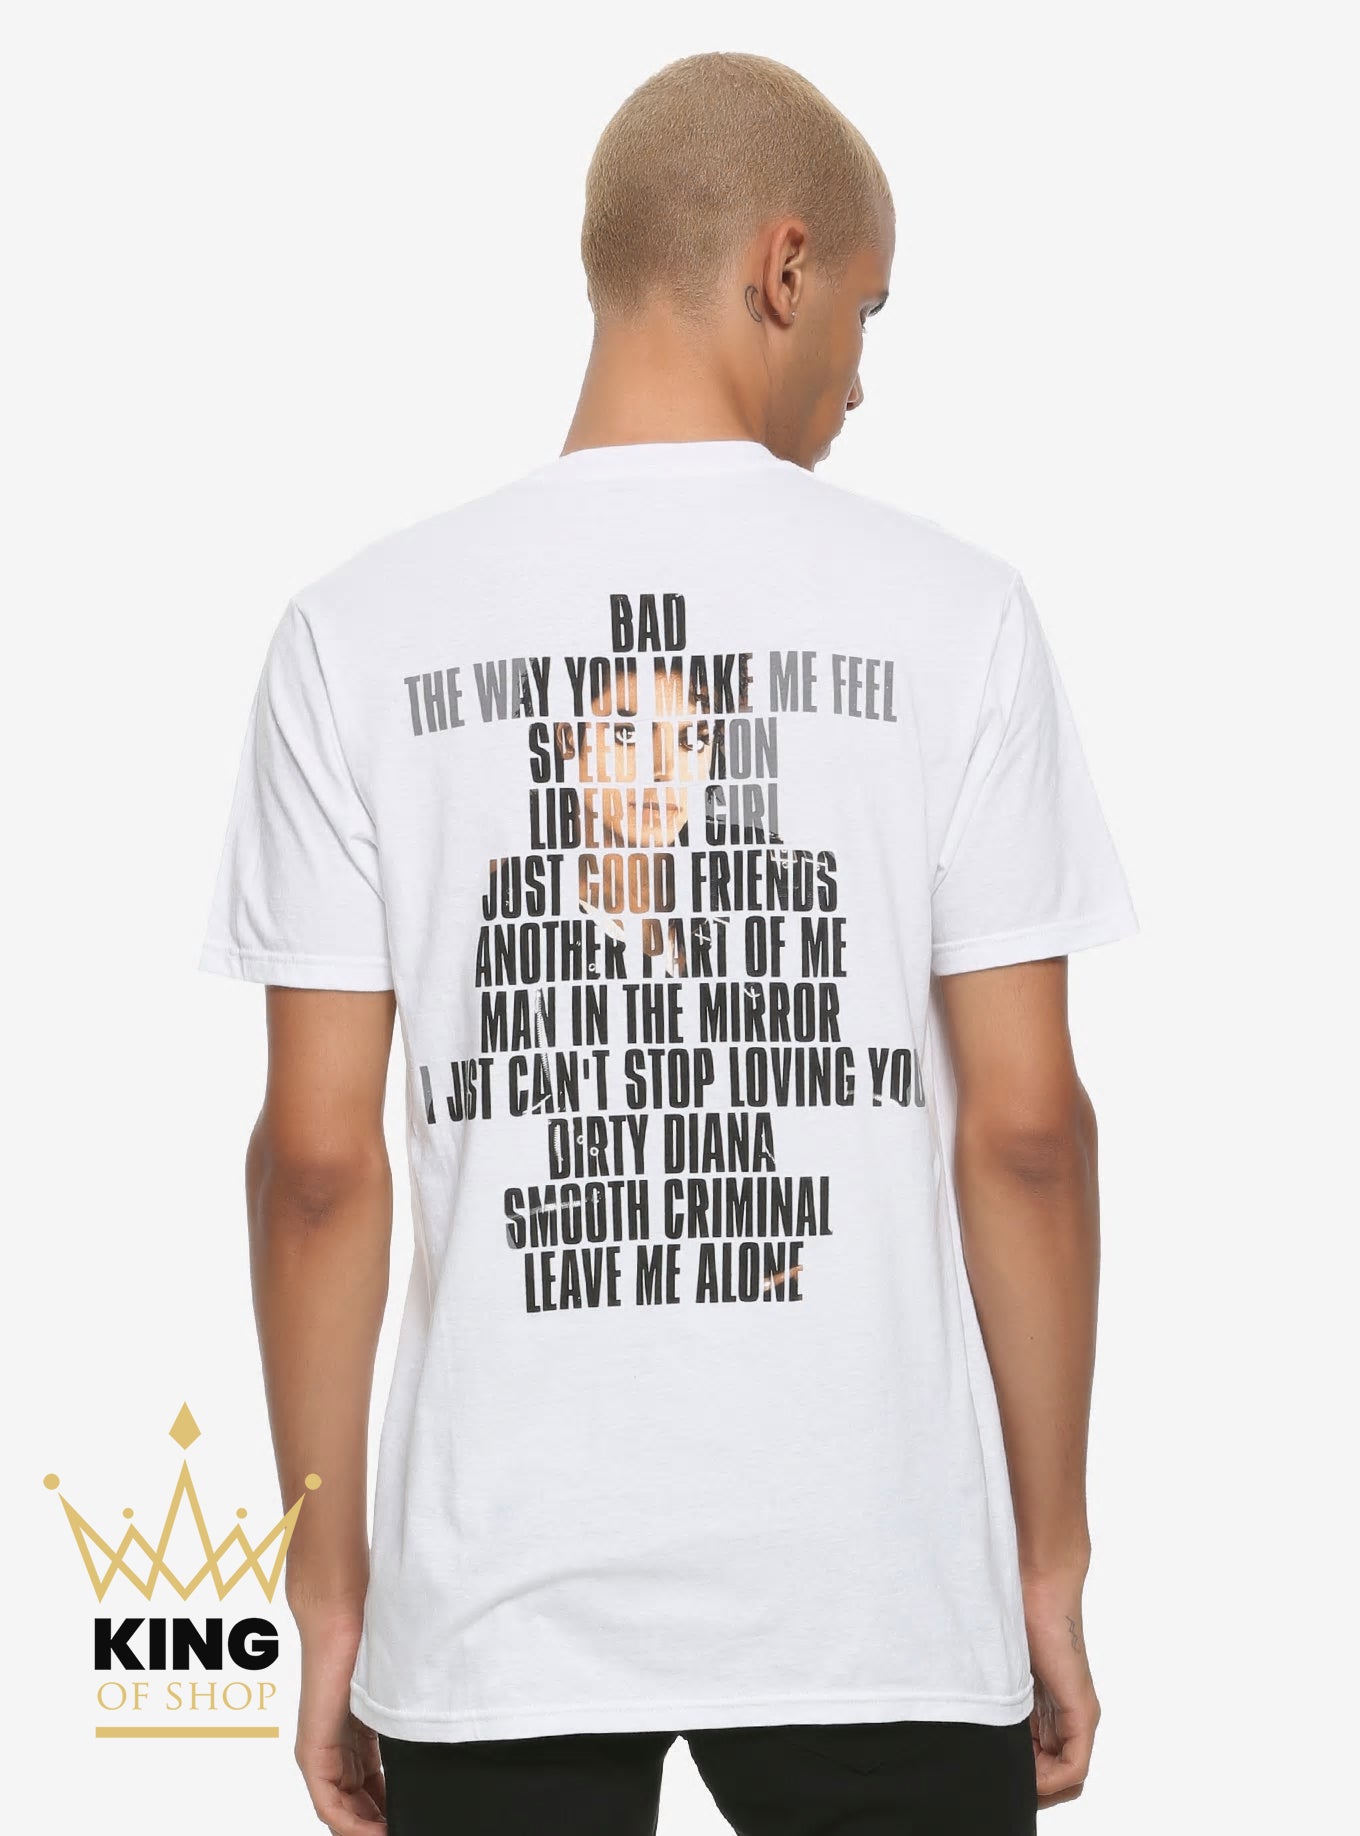 Michael Jackson Bad T-Shirt - Official Merchandise 